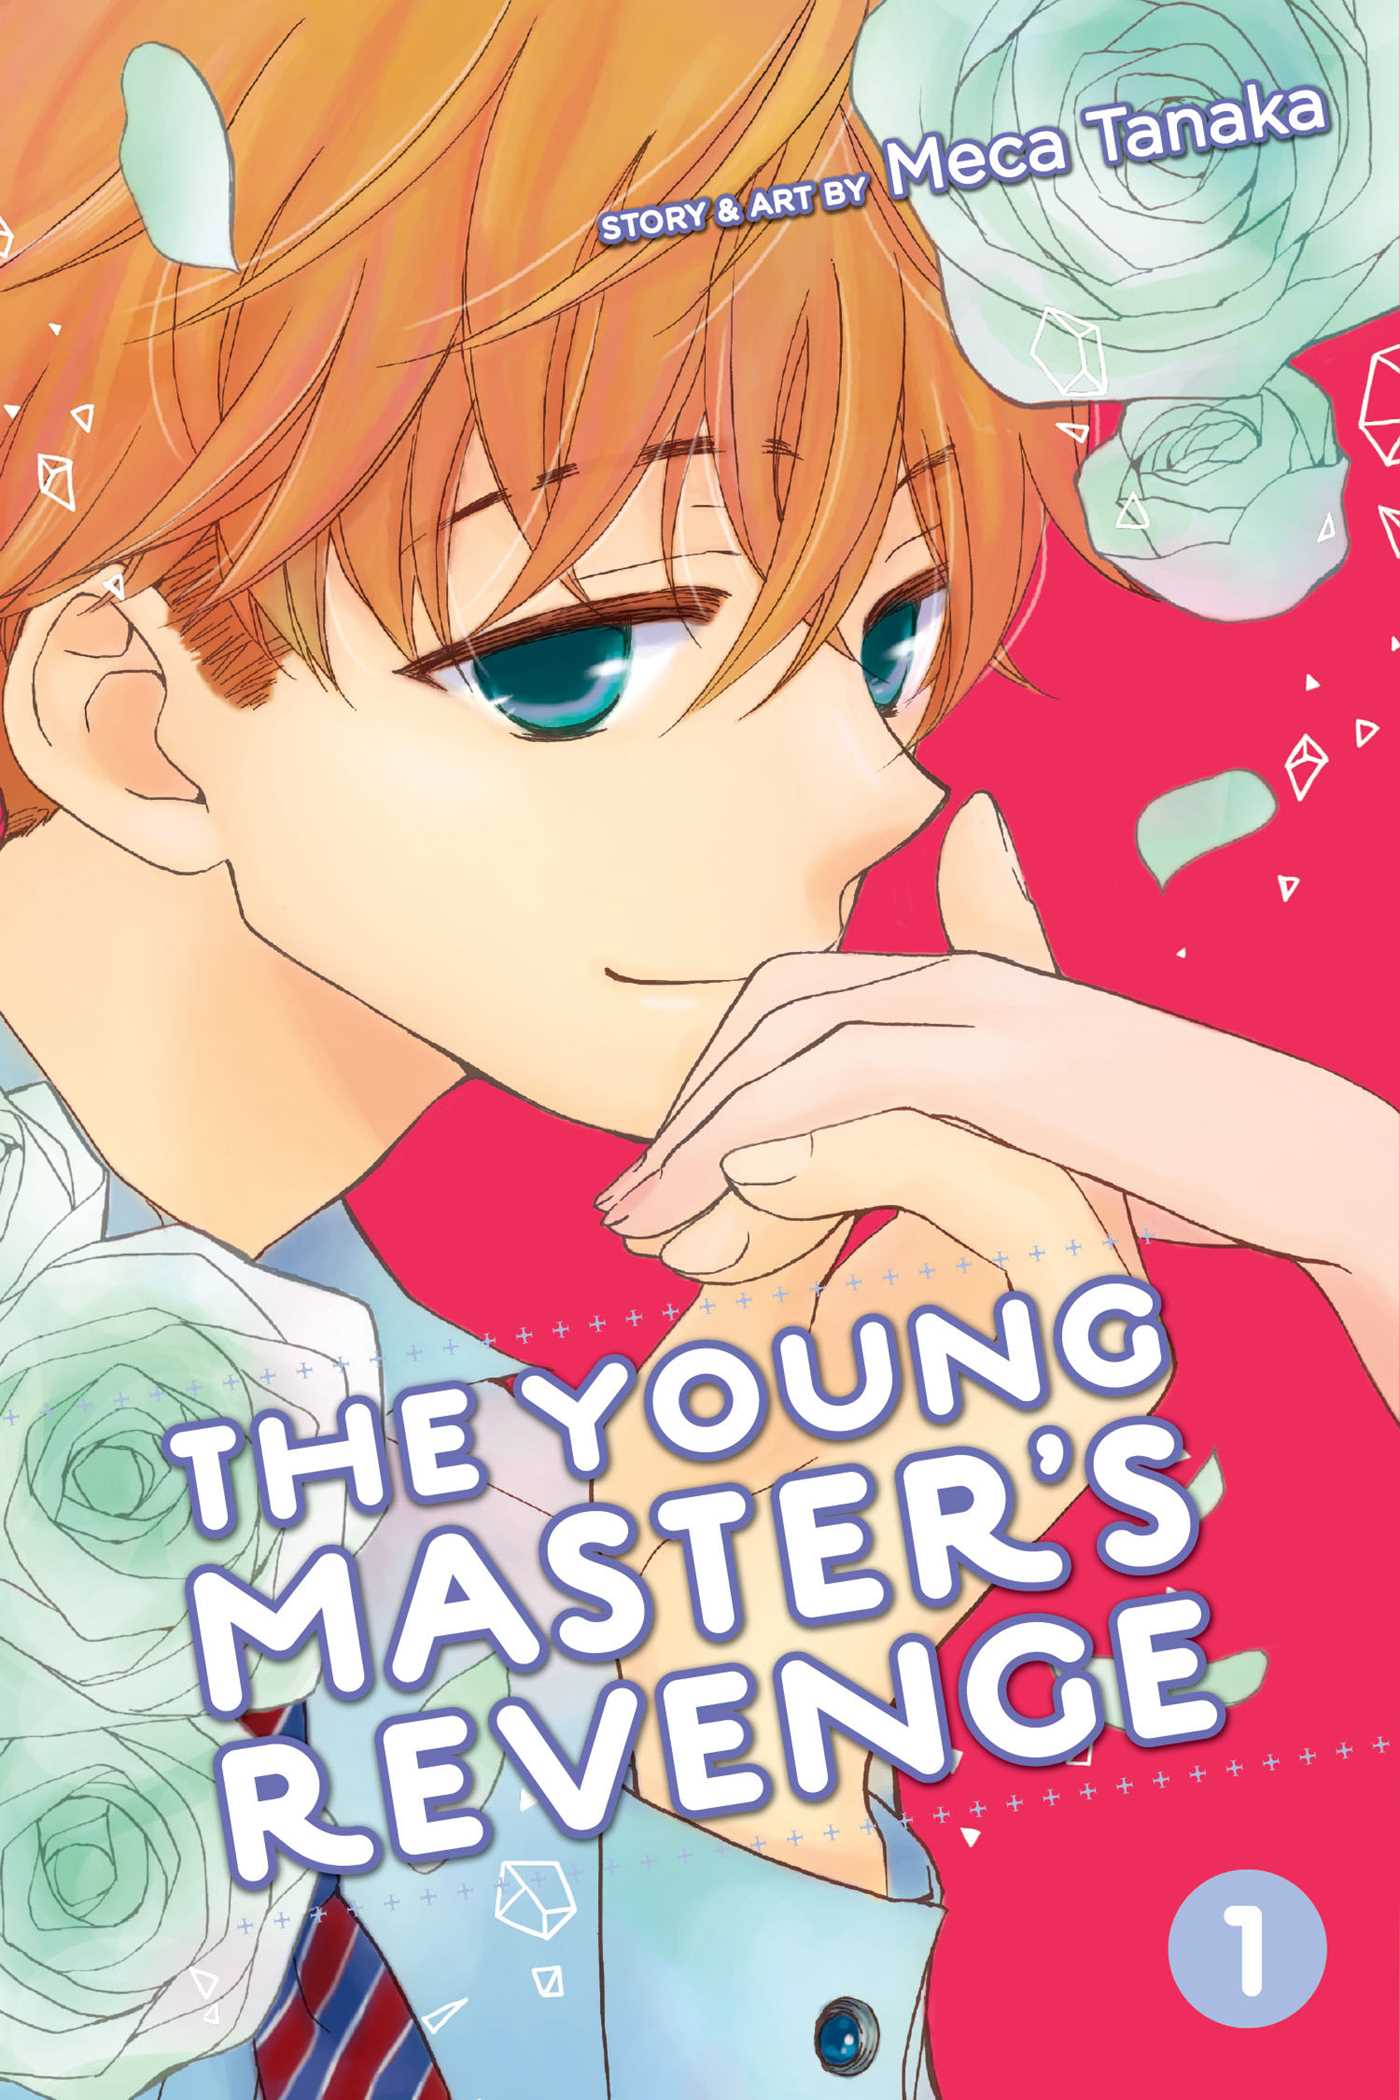 Viz Media announces upcoming manga series 'The Young Master's Revenge'